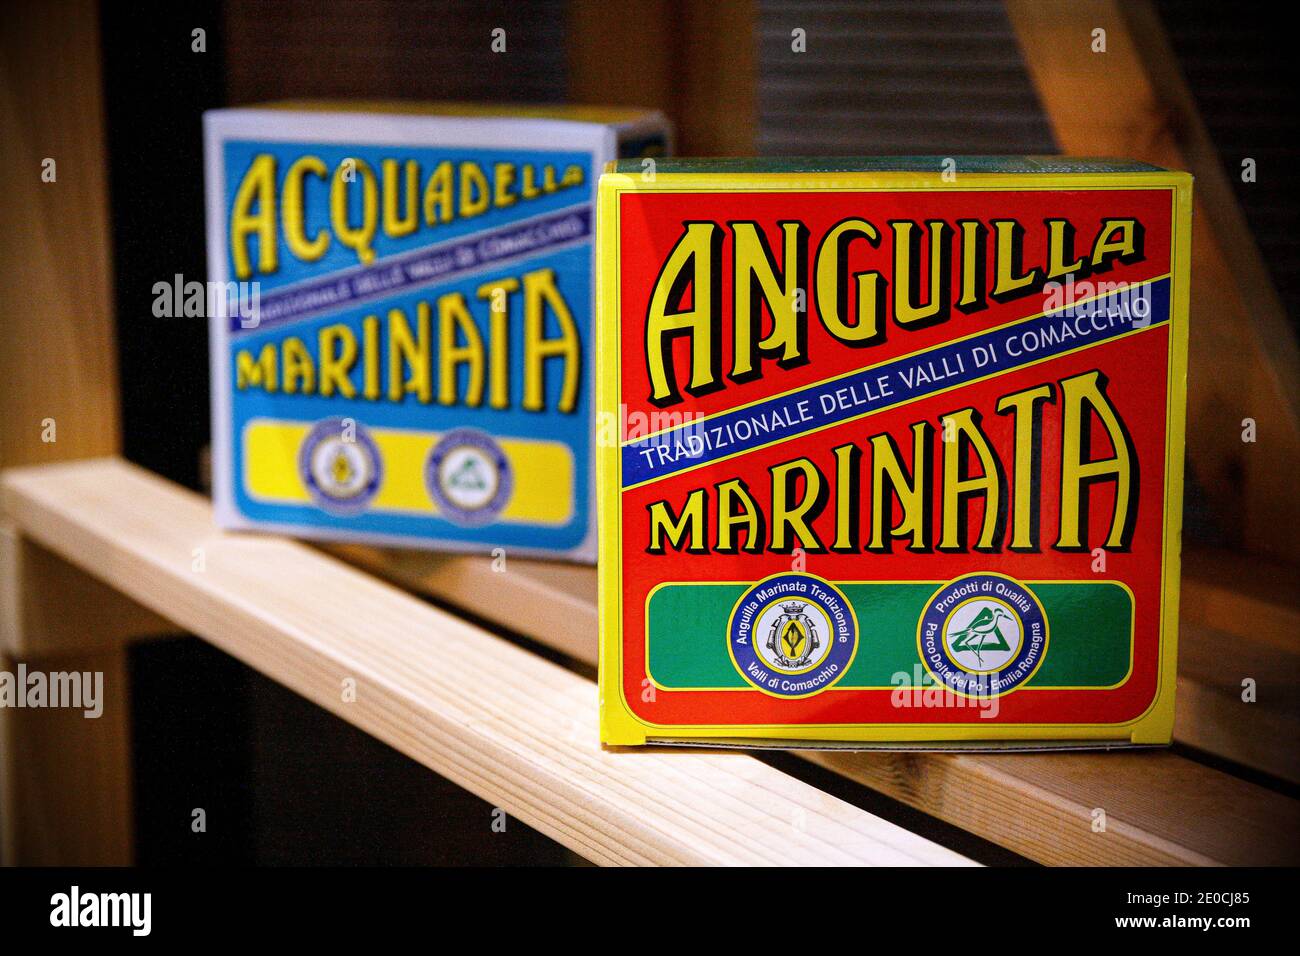 Italy Emilia Romagna - Valli di Comacchio - canned food products -  Acquadella Marinata and eel marinata Stock Photo - Alamy